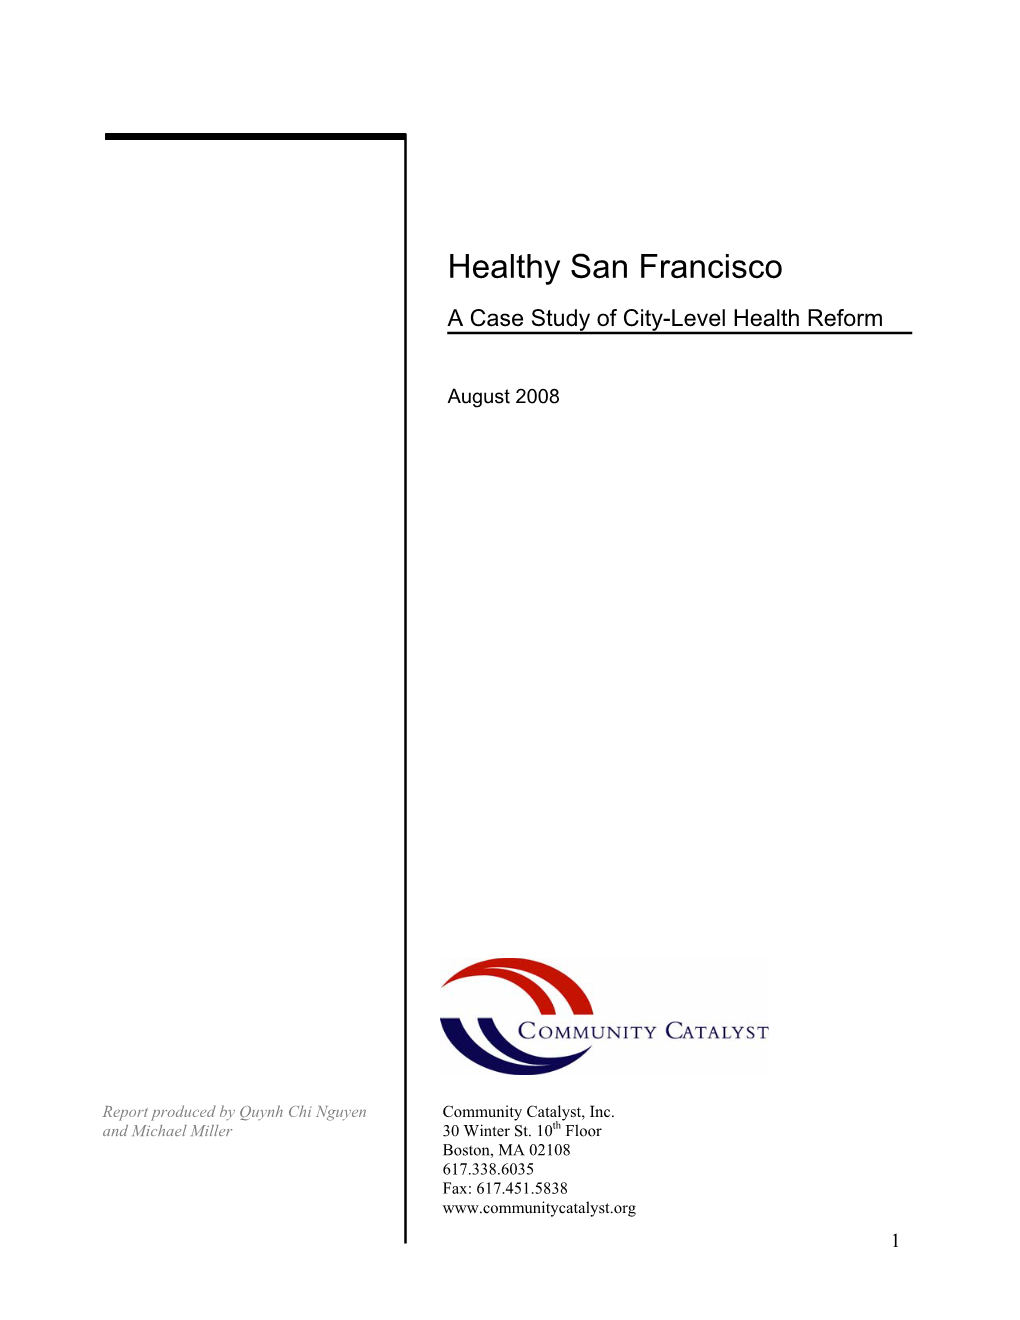 Healthy San Francisco: a Case Study of City-Level Health Reform